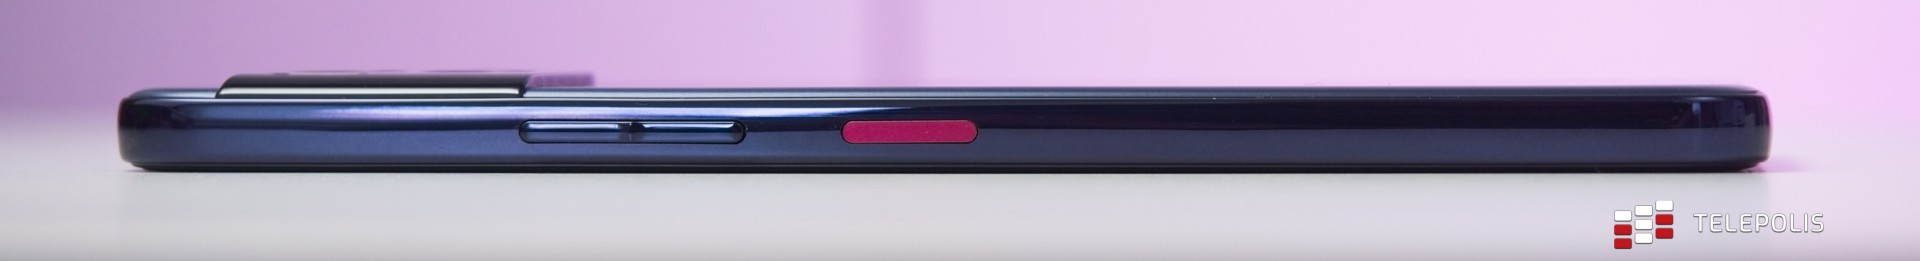 T Phone 2 Pro - test